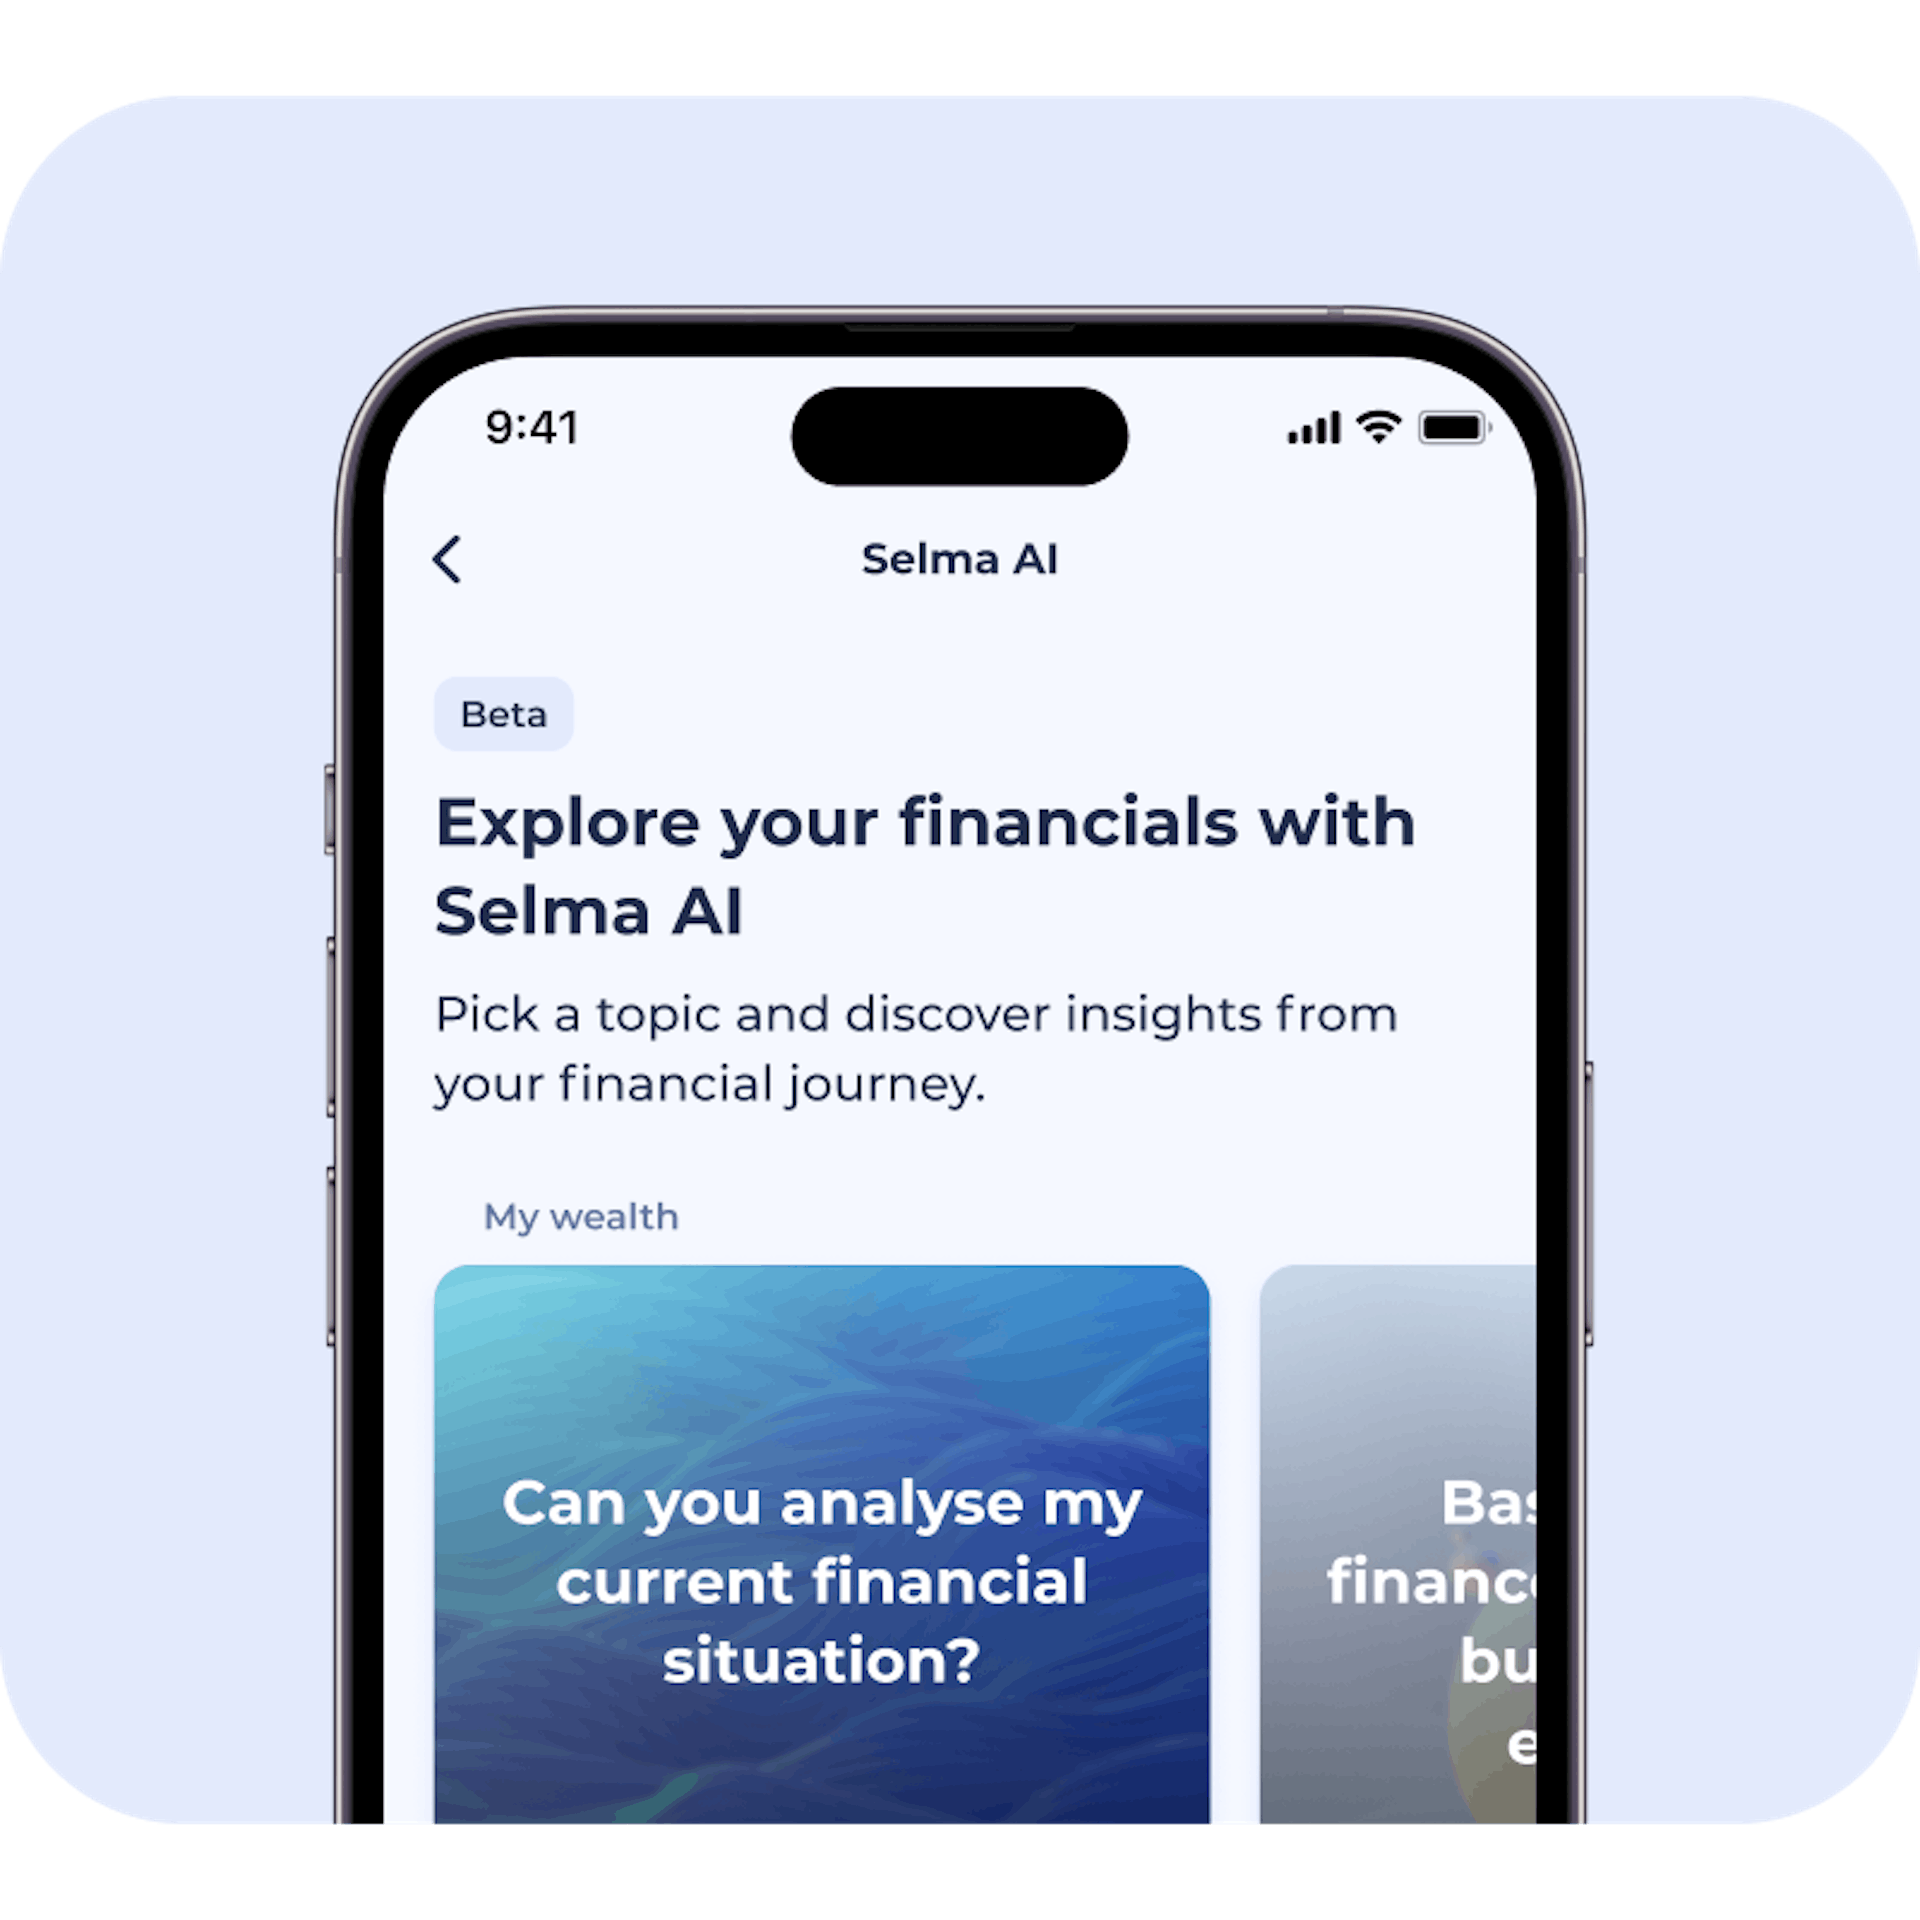 Image of Selma AI discovery interface